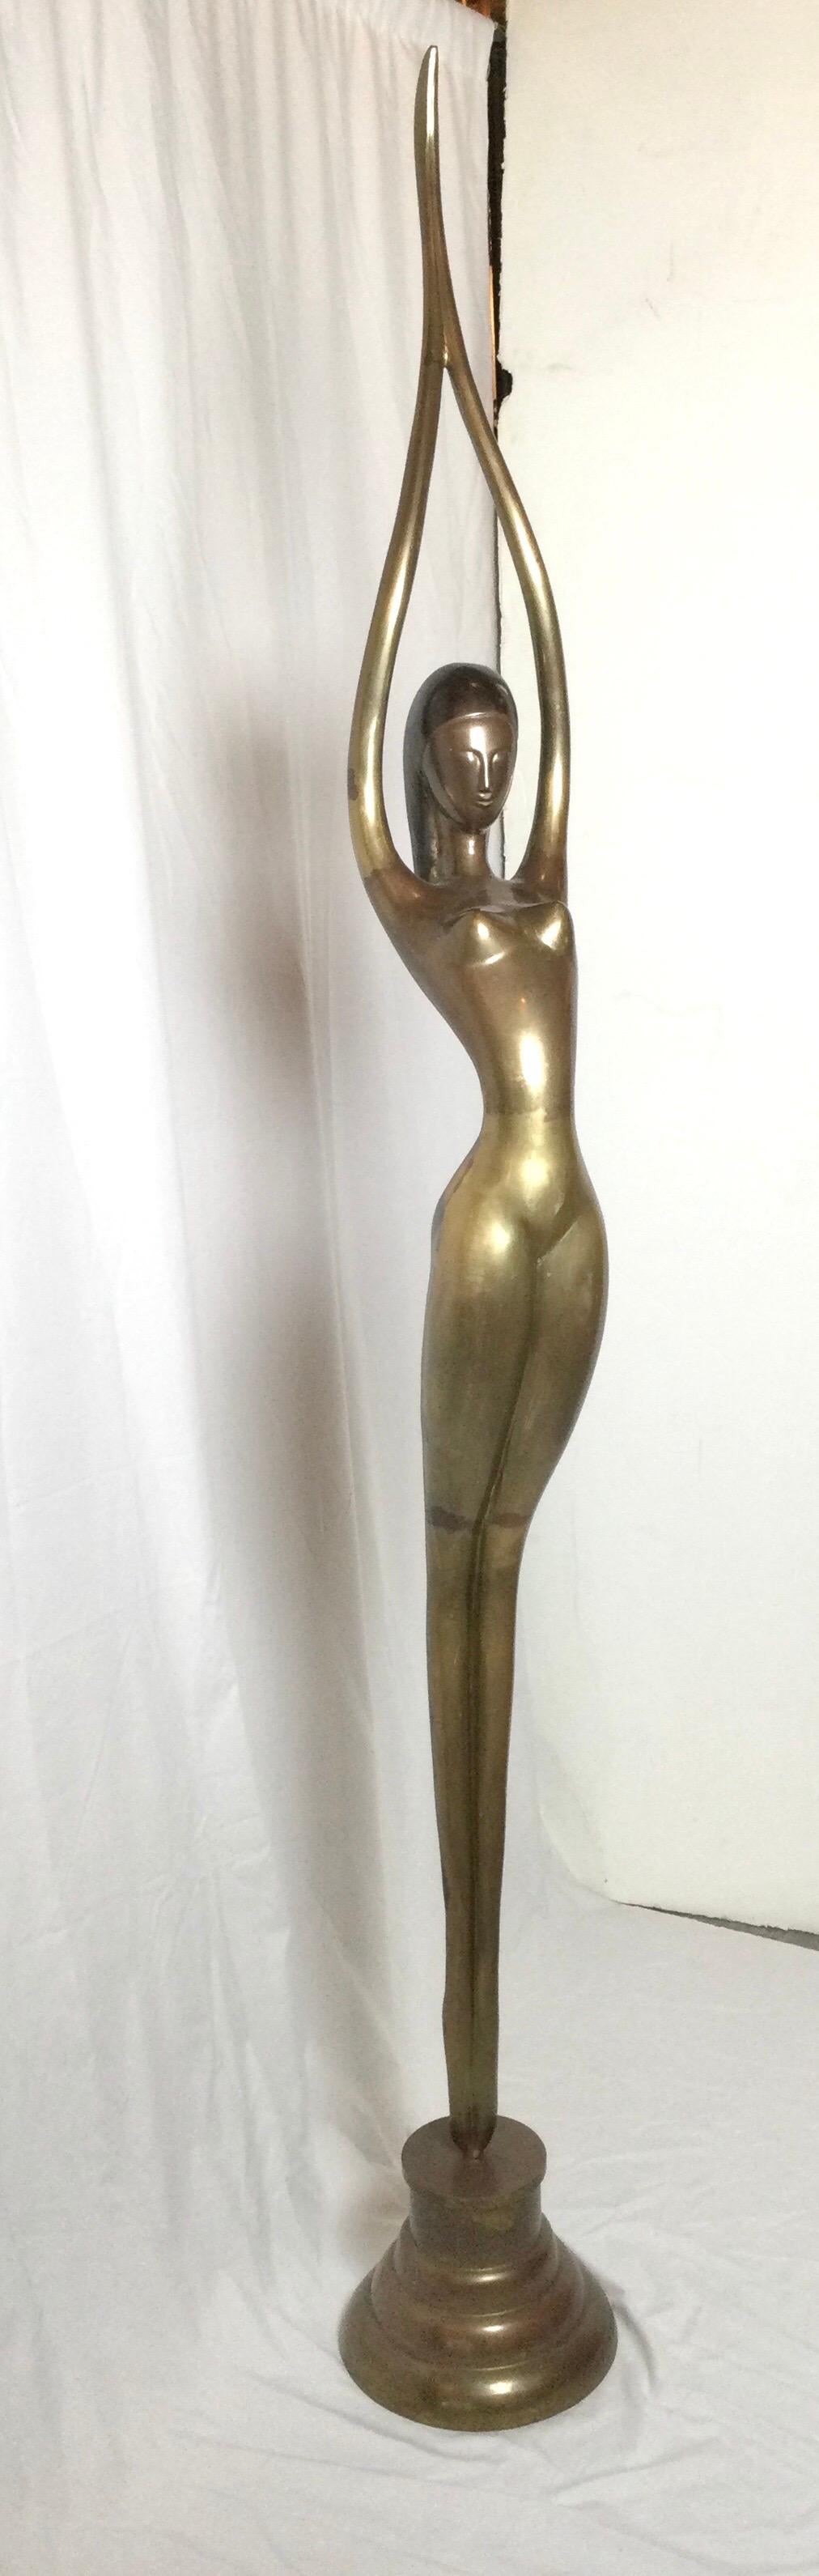 Tall Art Deco Style Midcentury Brass Sculpture of a Wolman 1